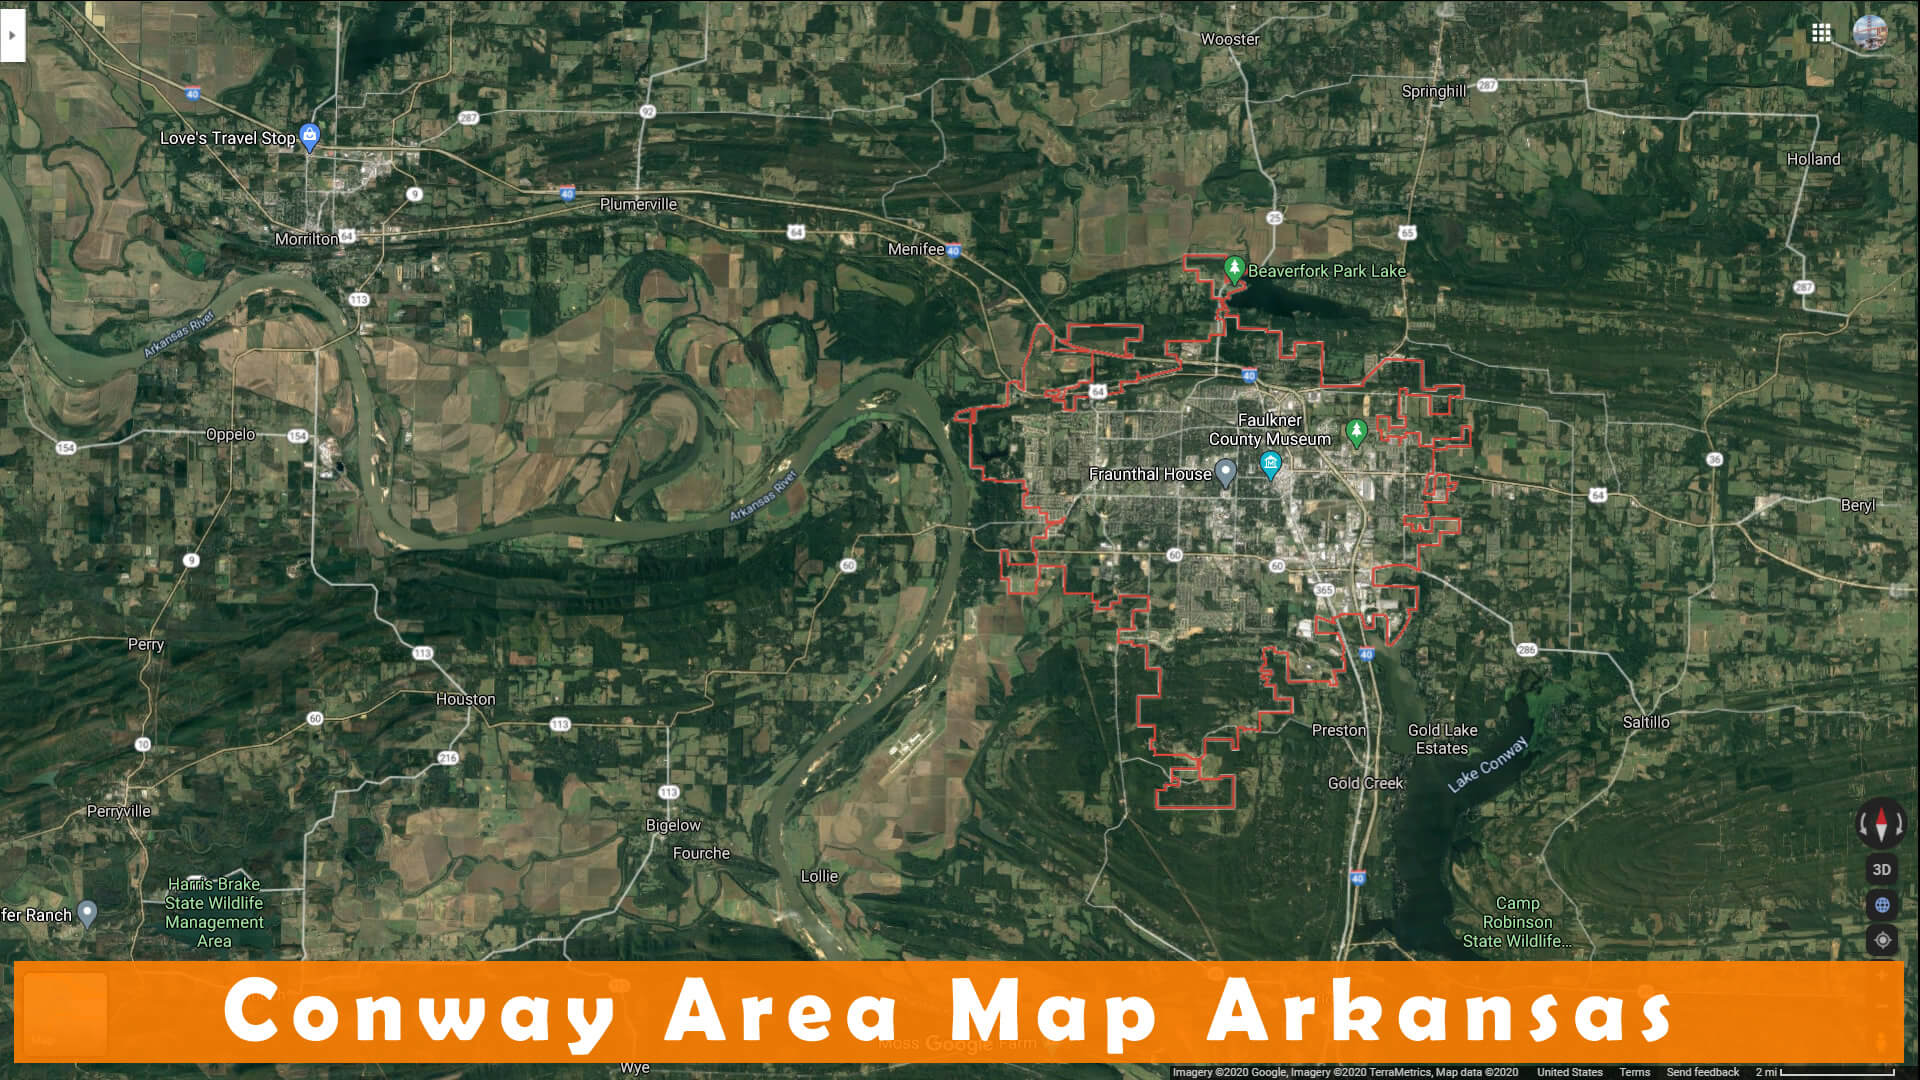 Conway Area Map Arkansas